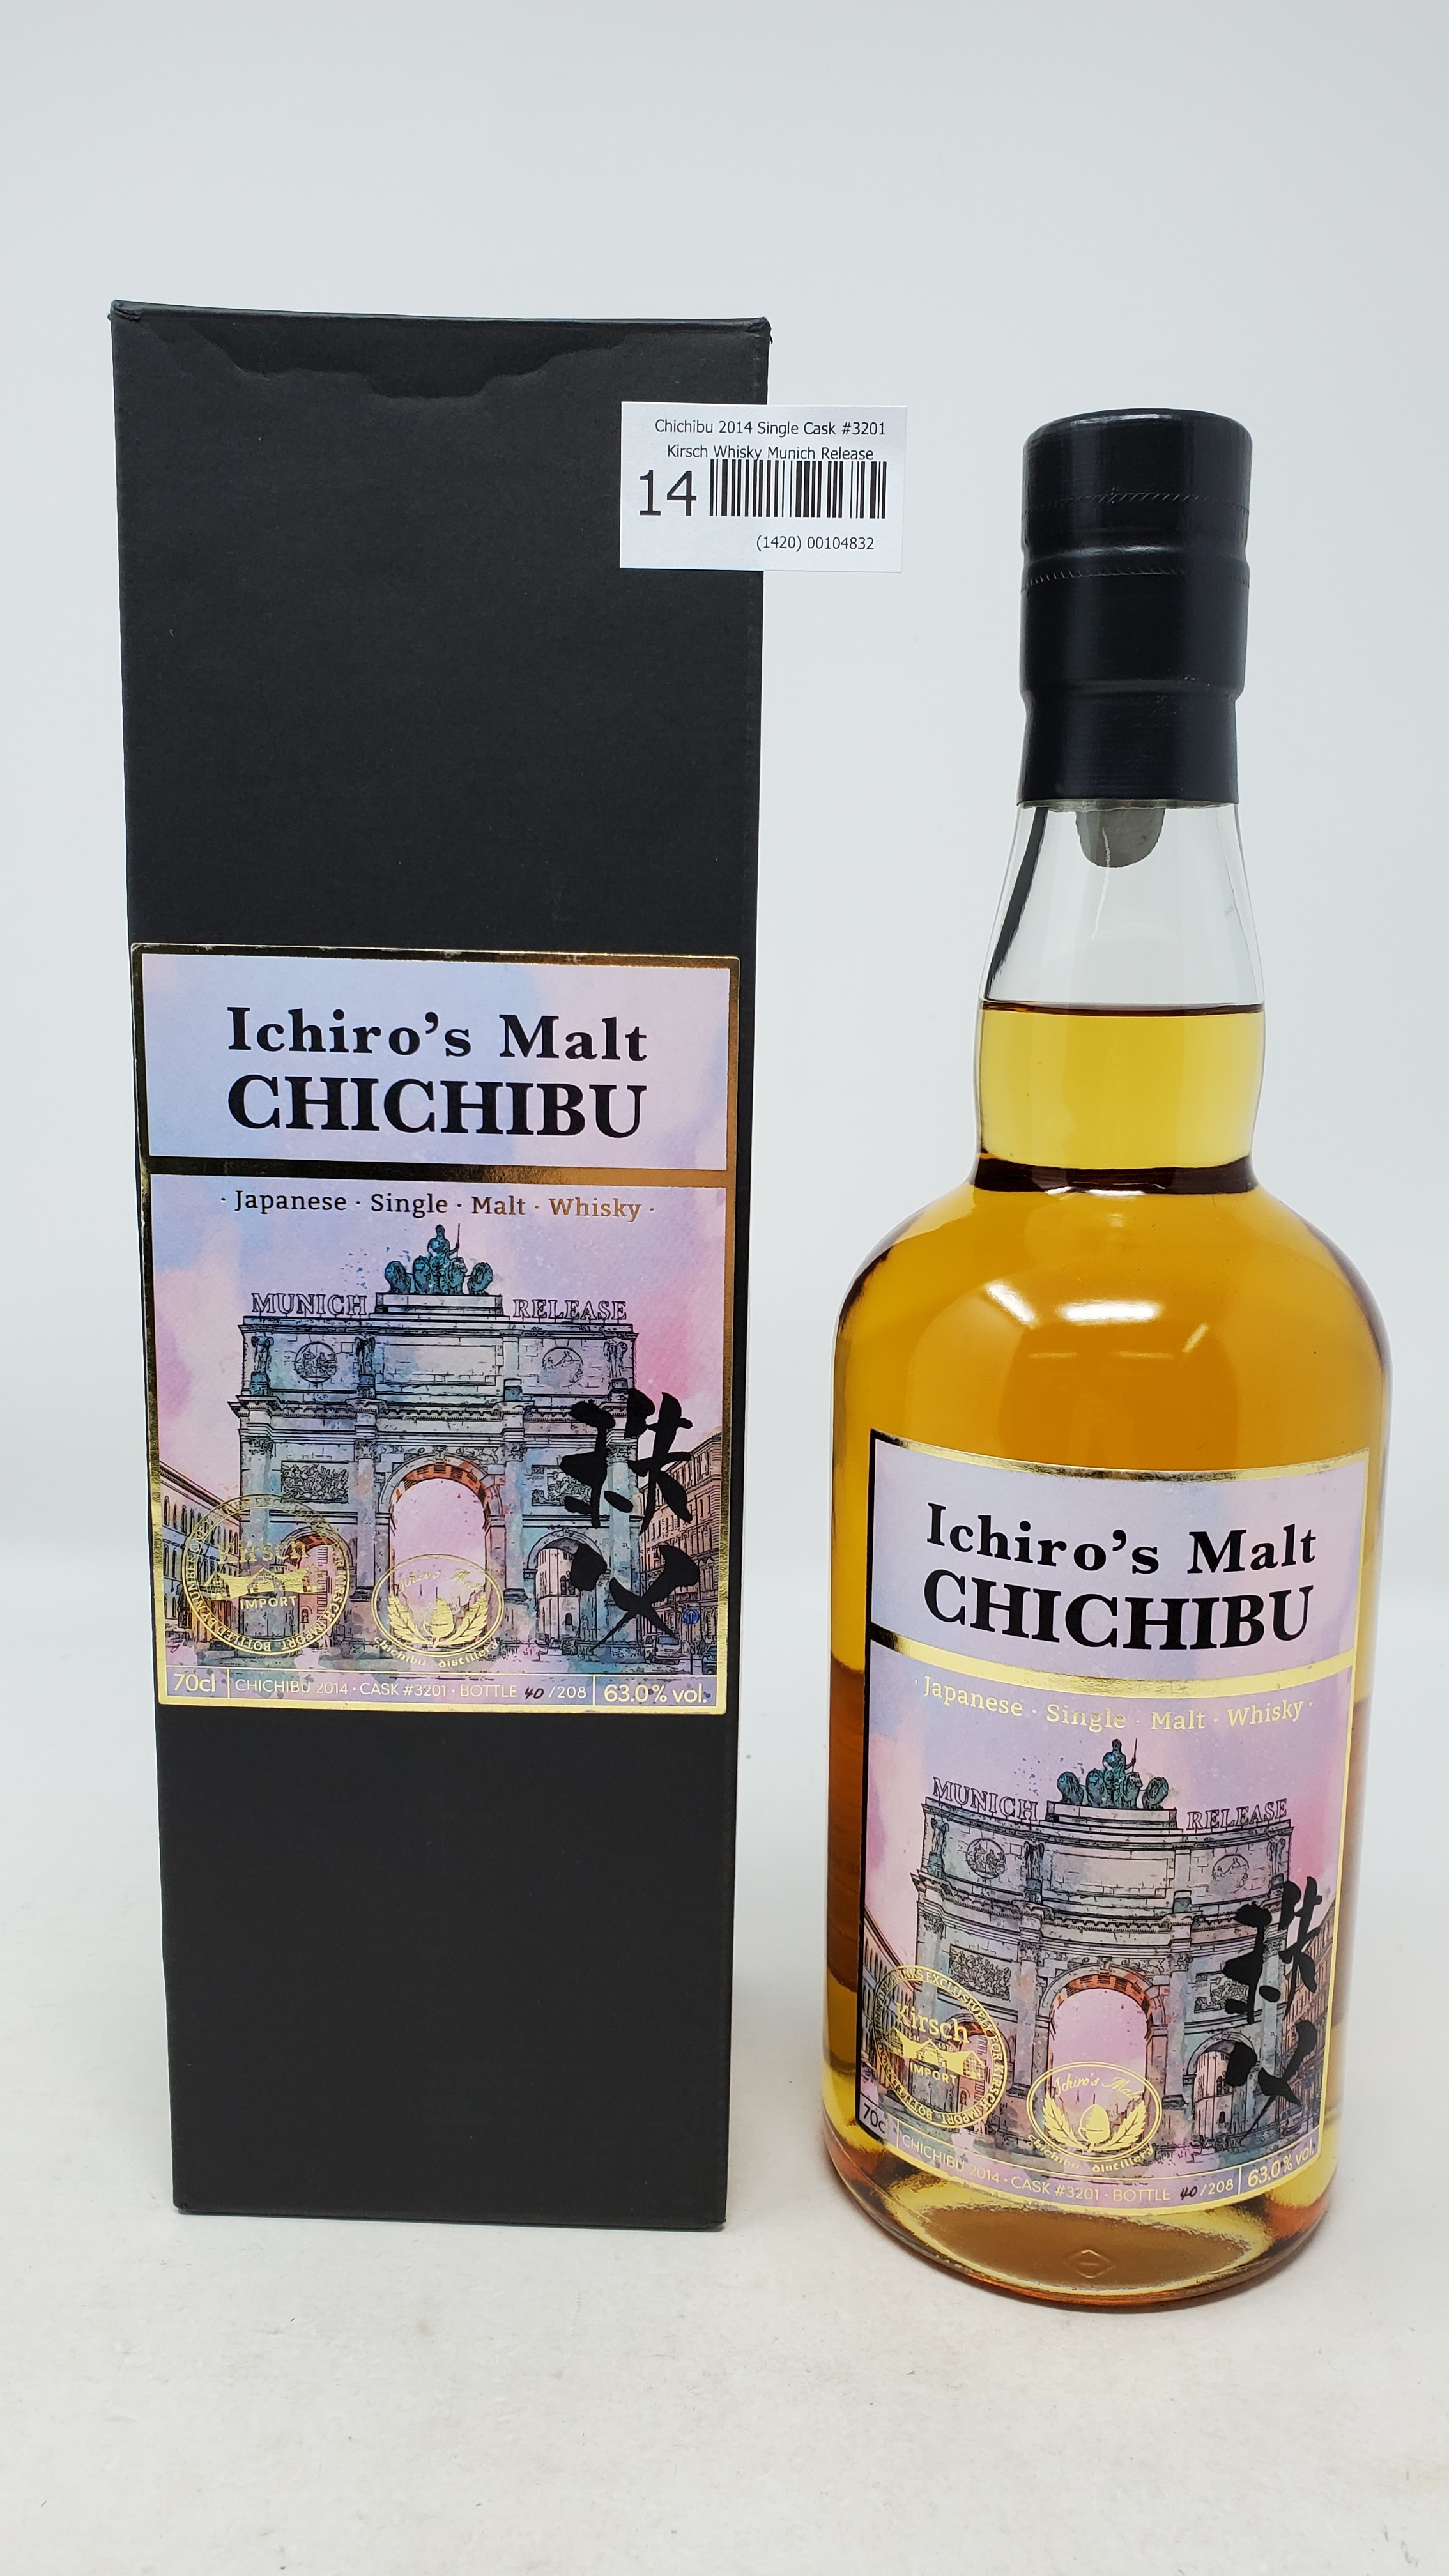 Chichibu 2014 Single Cask #3201 Kirsch Whisky Munich Release